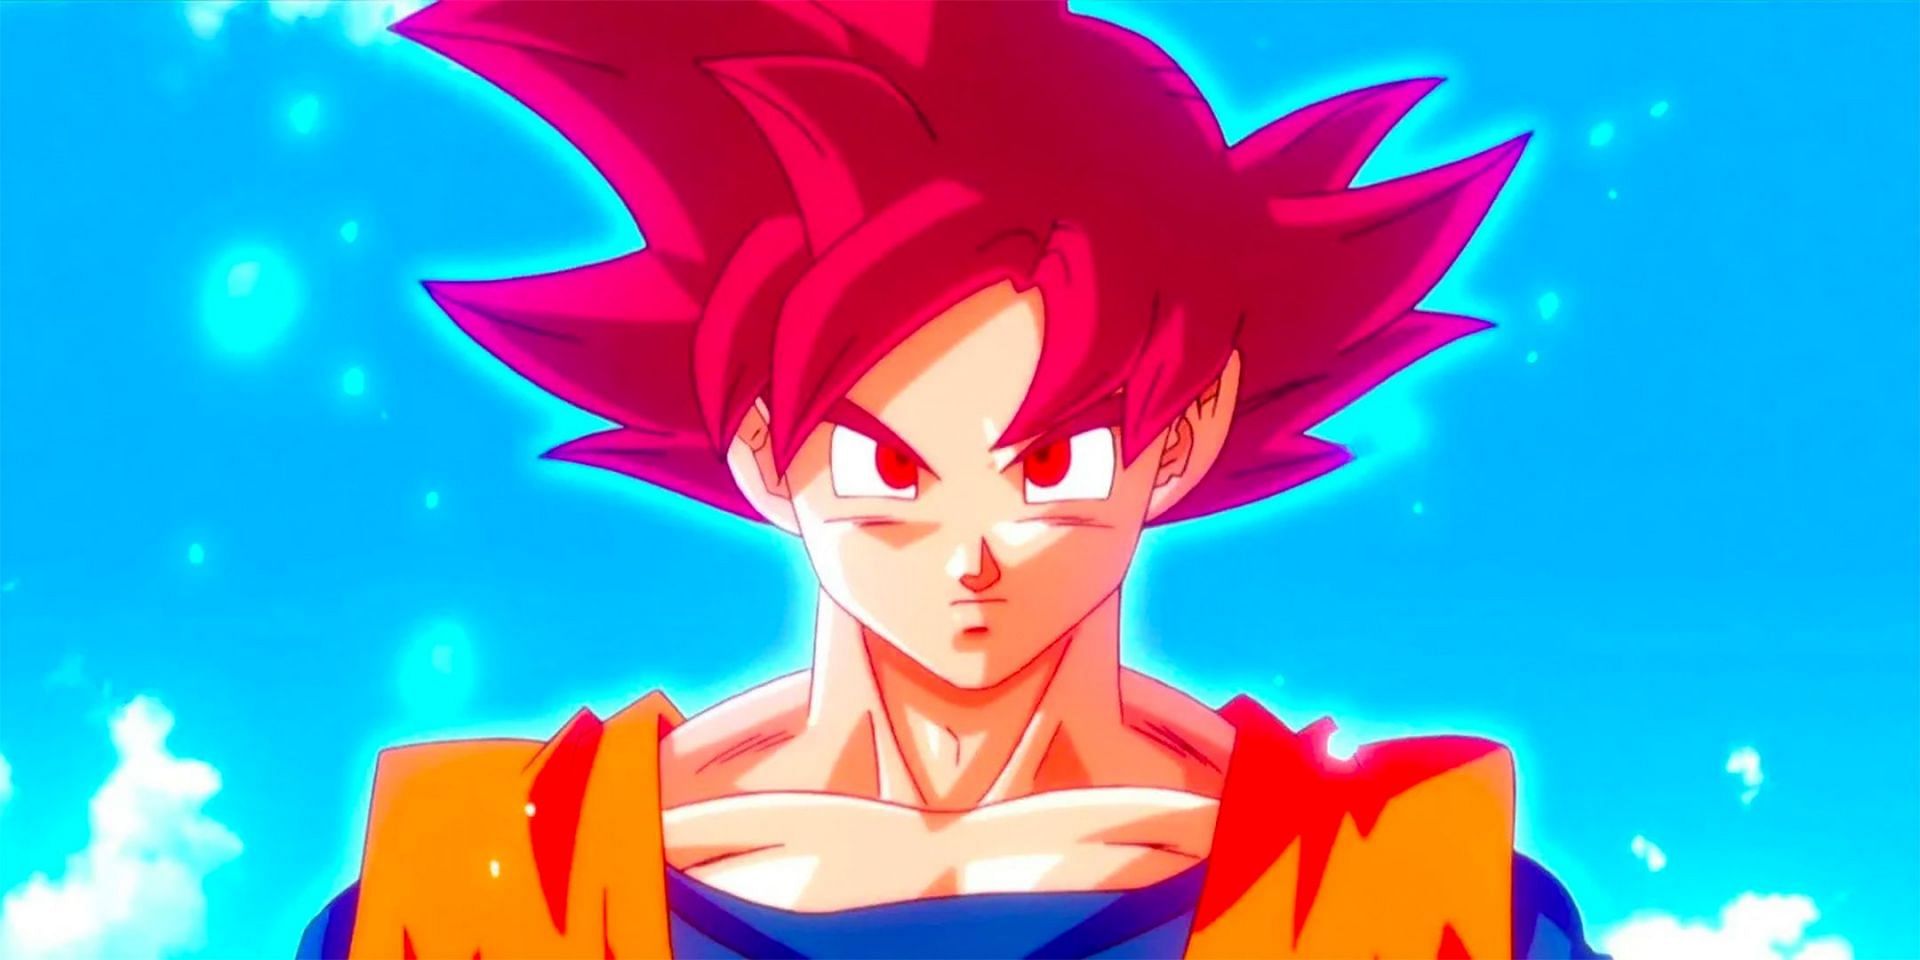 Goku Super Saiyan God (Image via Toei Animation)